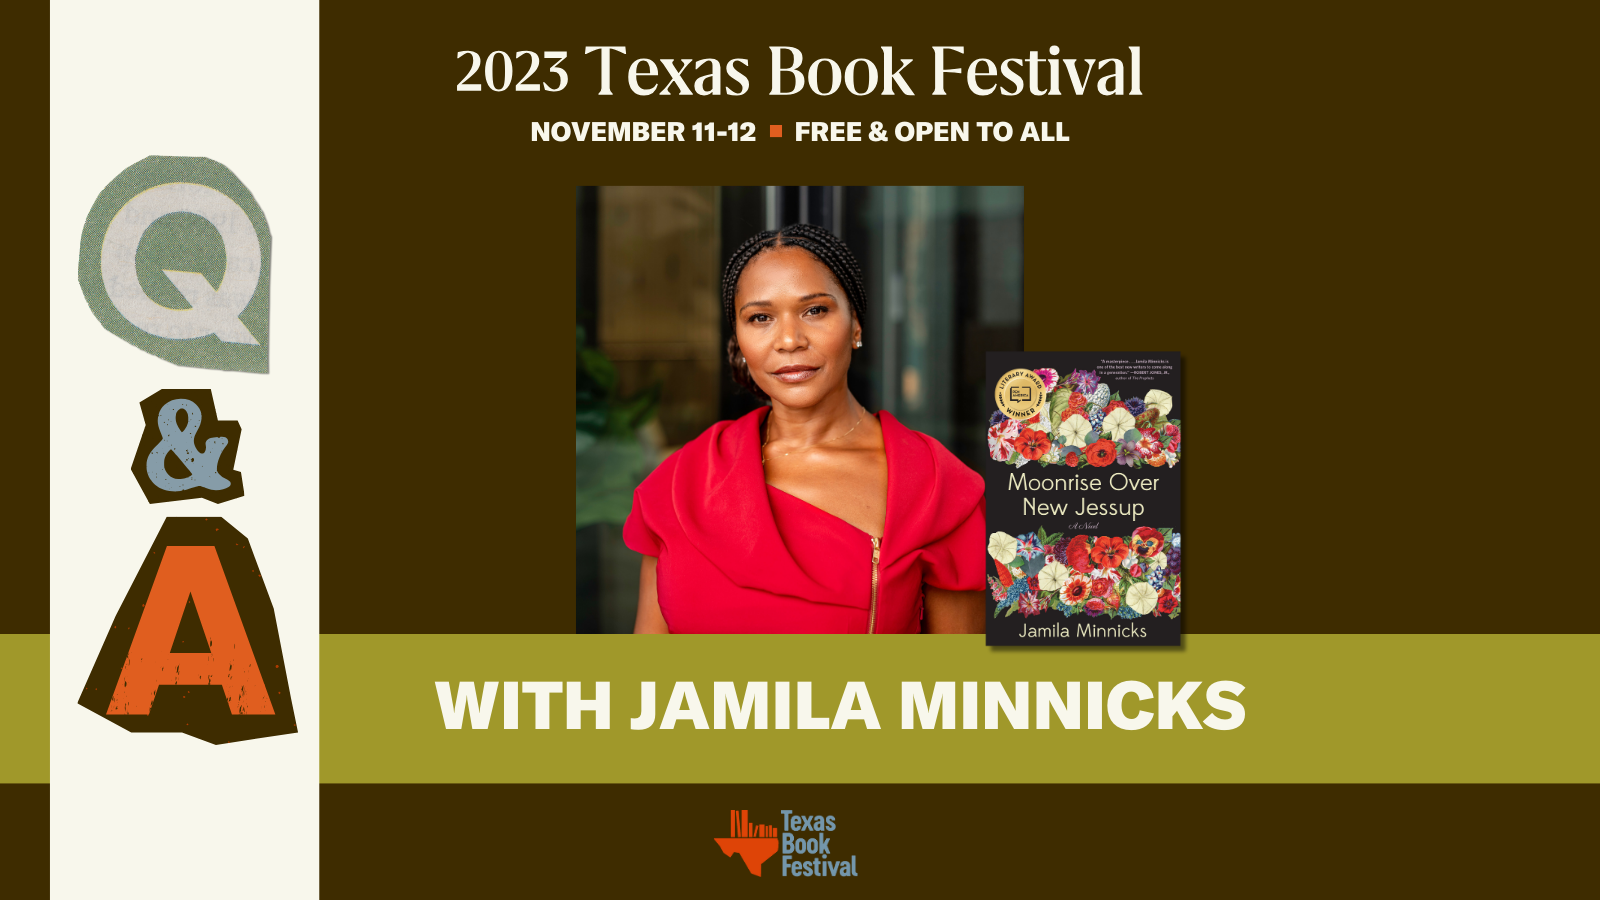 Q&A With Jamila Minnicks